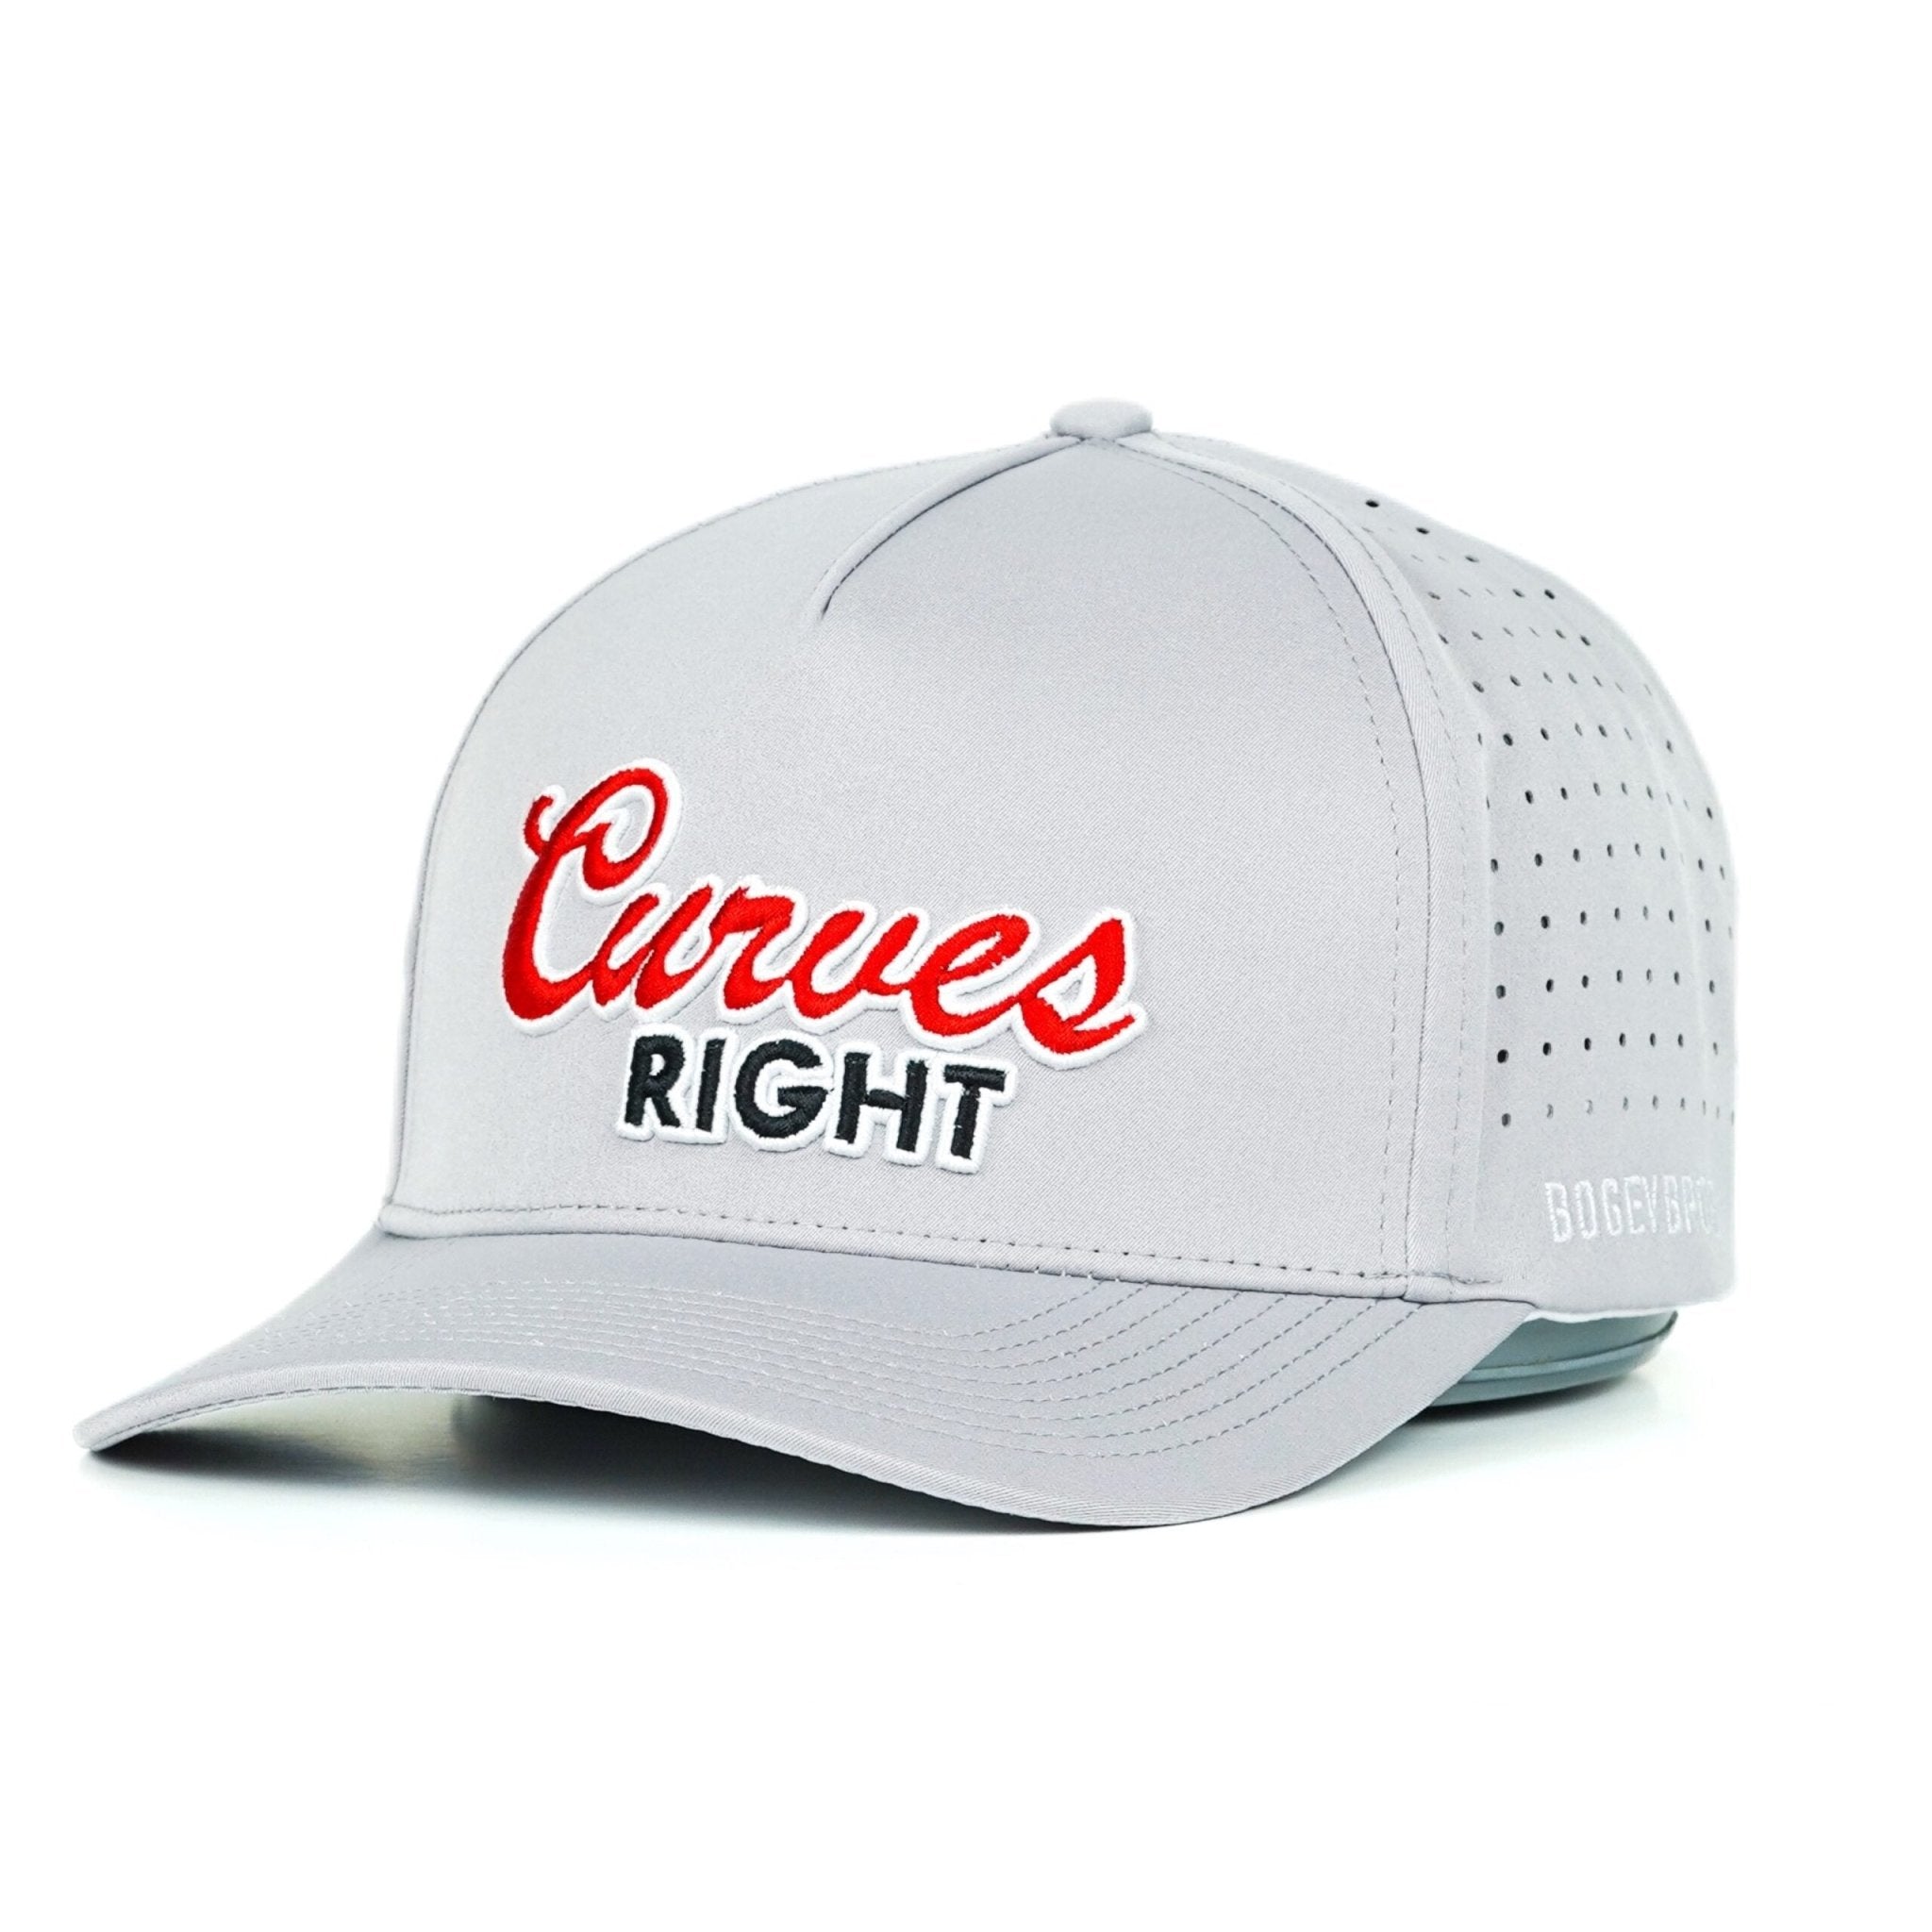 Curves Right - Performance Golf Hat - bogeybros-new